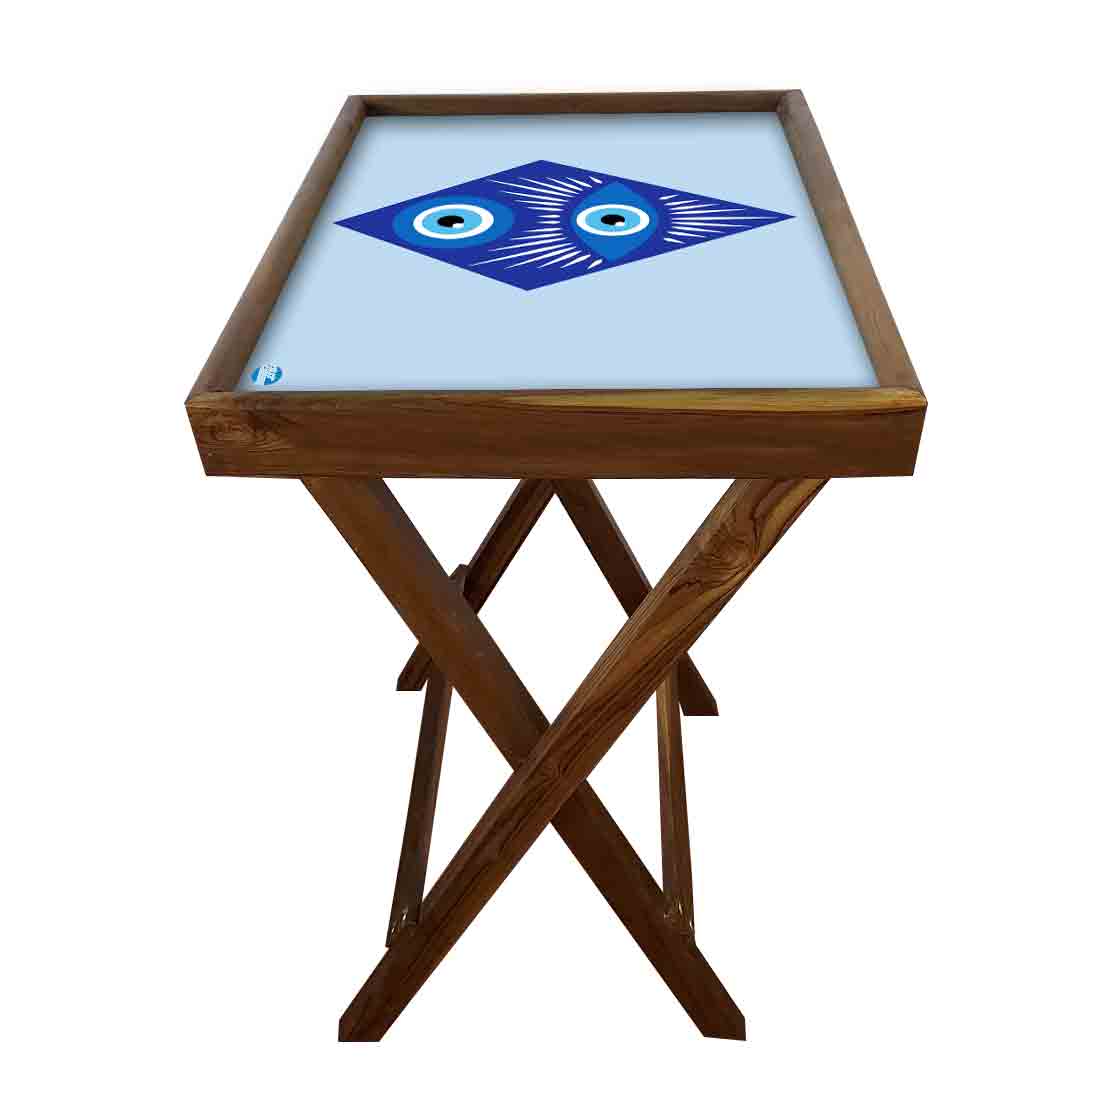 Wooden TV Trays for Eating Snacks Serving Folding End Table - Evil Eye Protector Nutcase